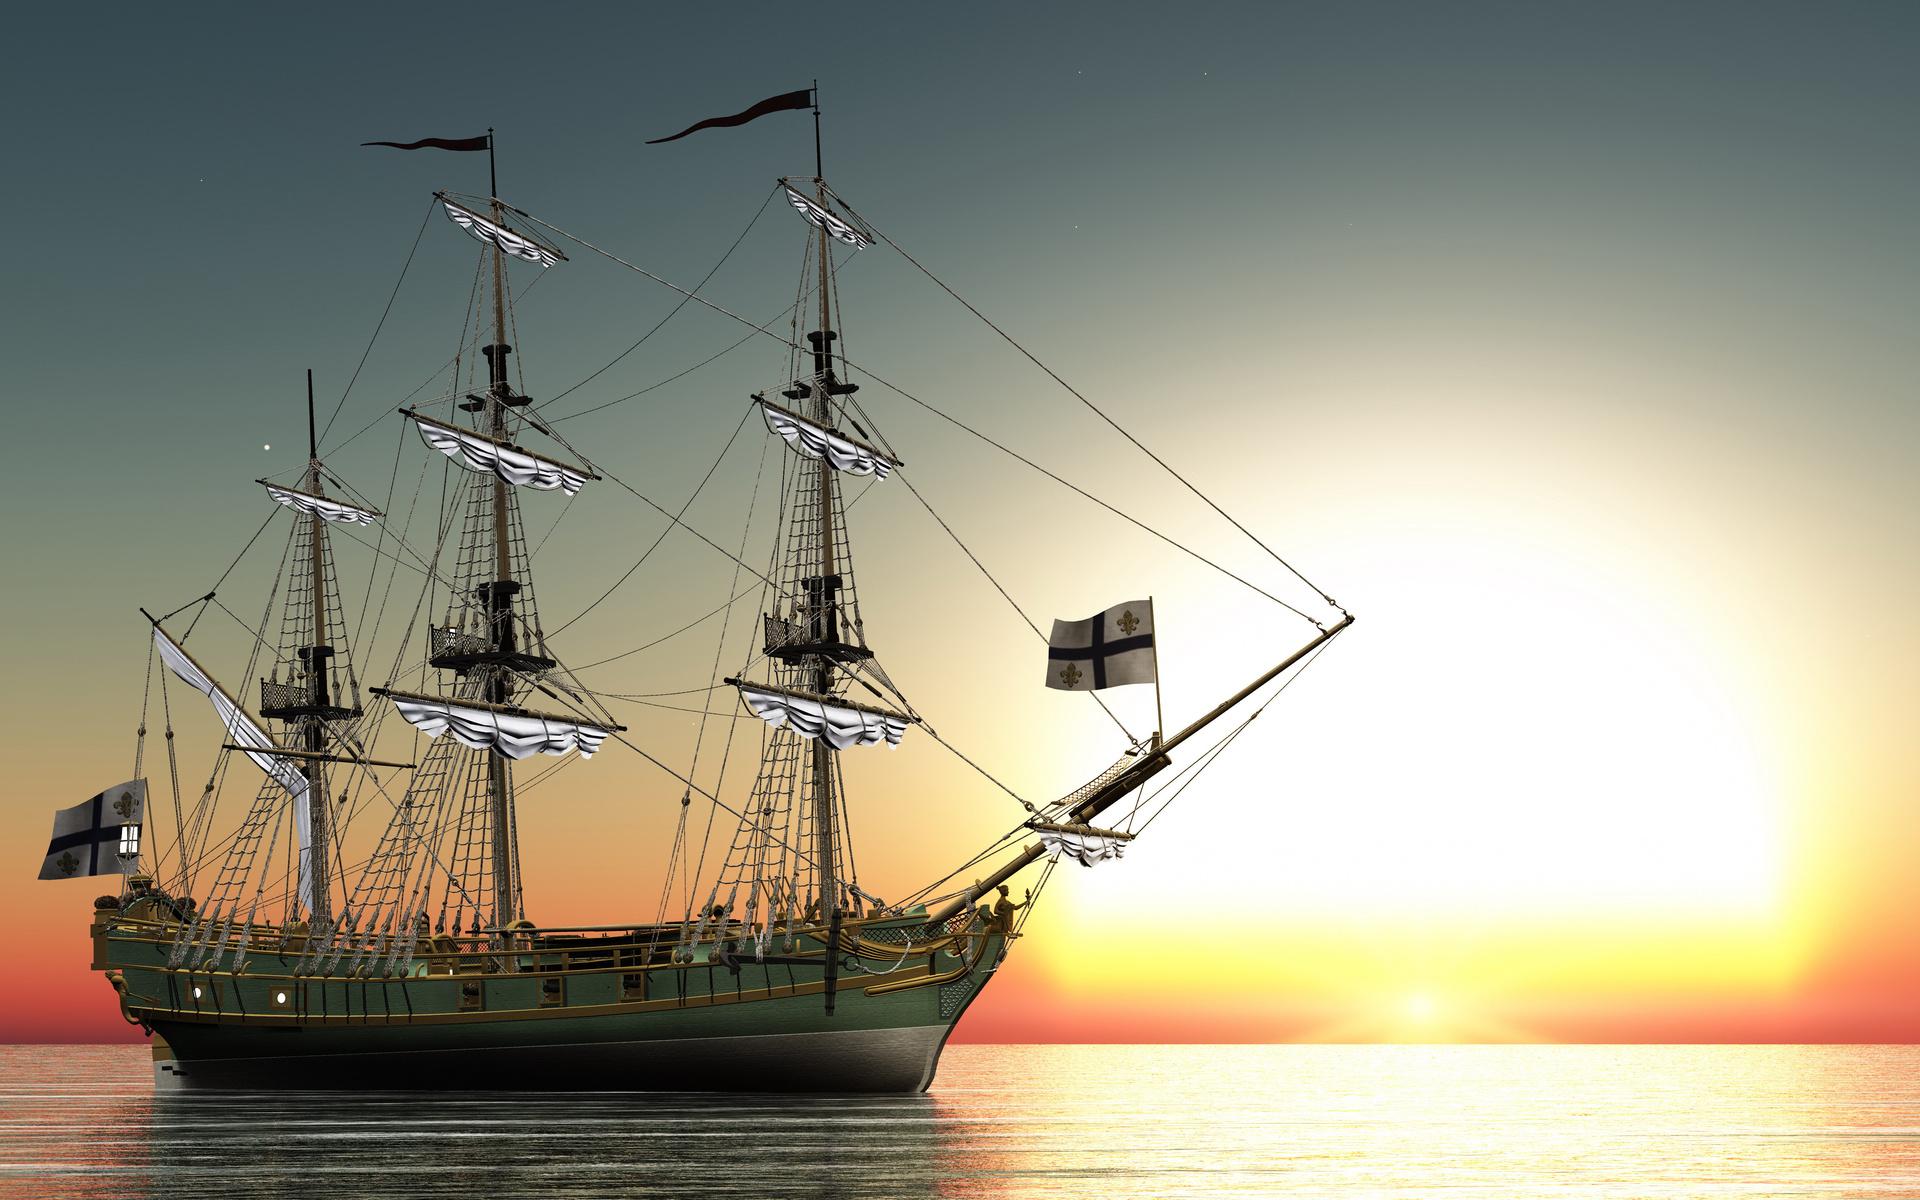 reflection 3D cg digital art fantasy sailing boats ships ocean sea